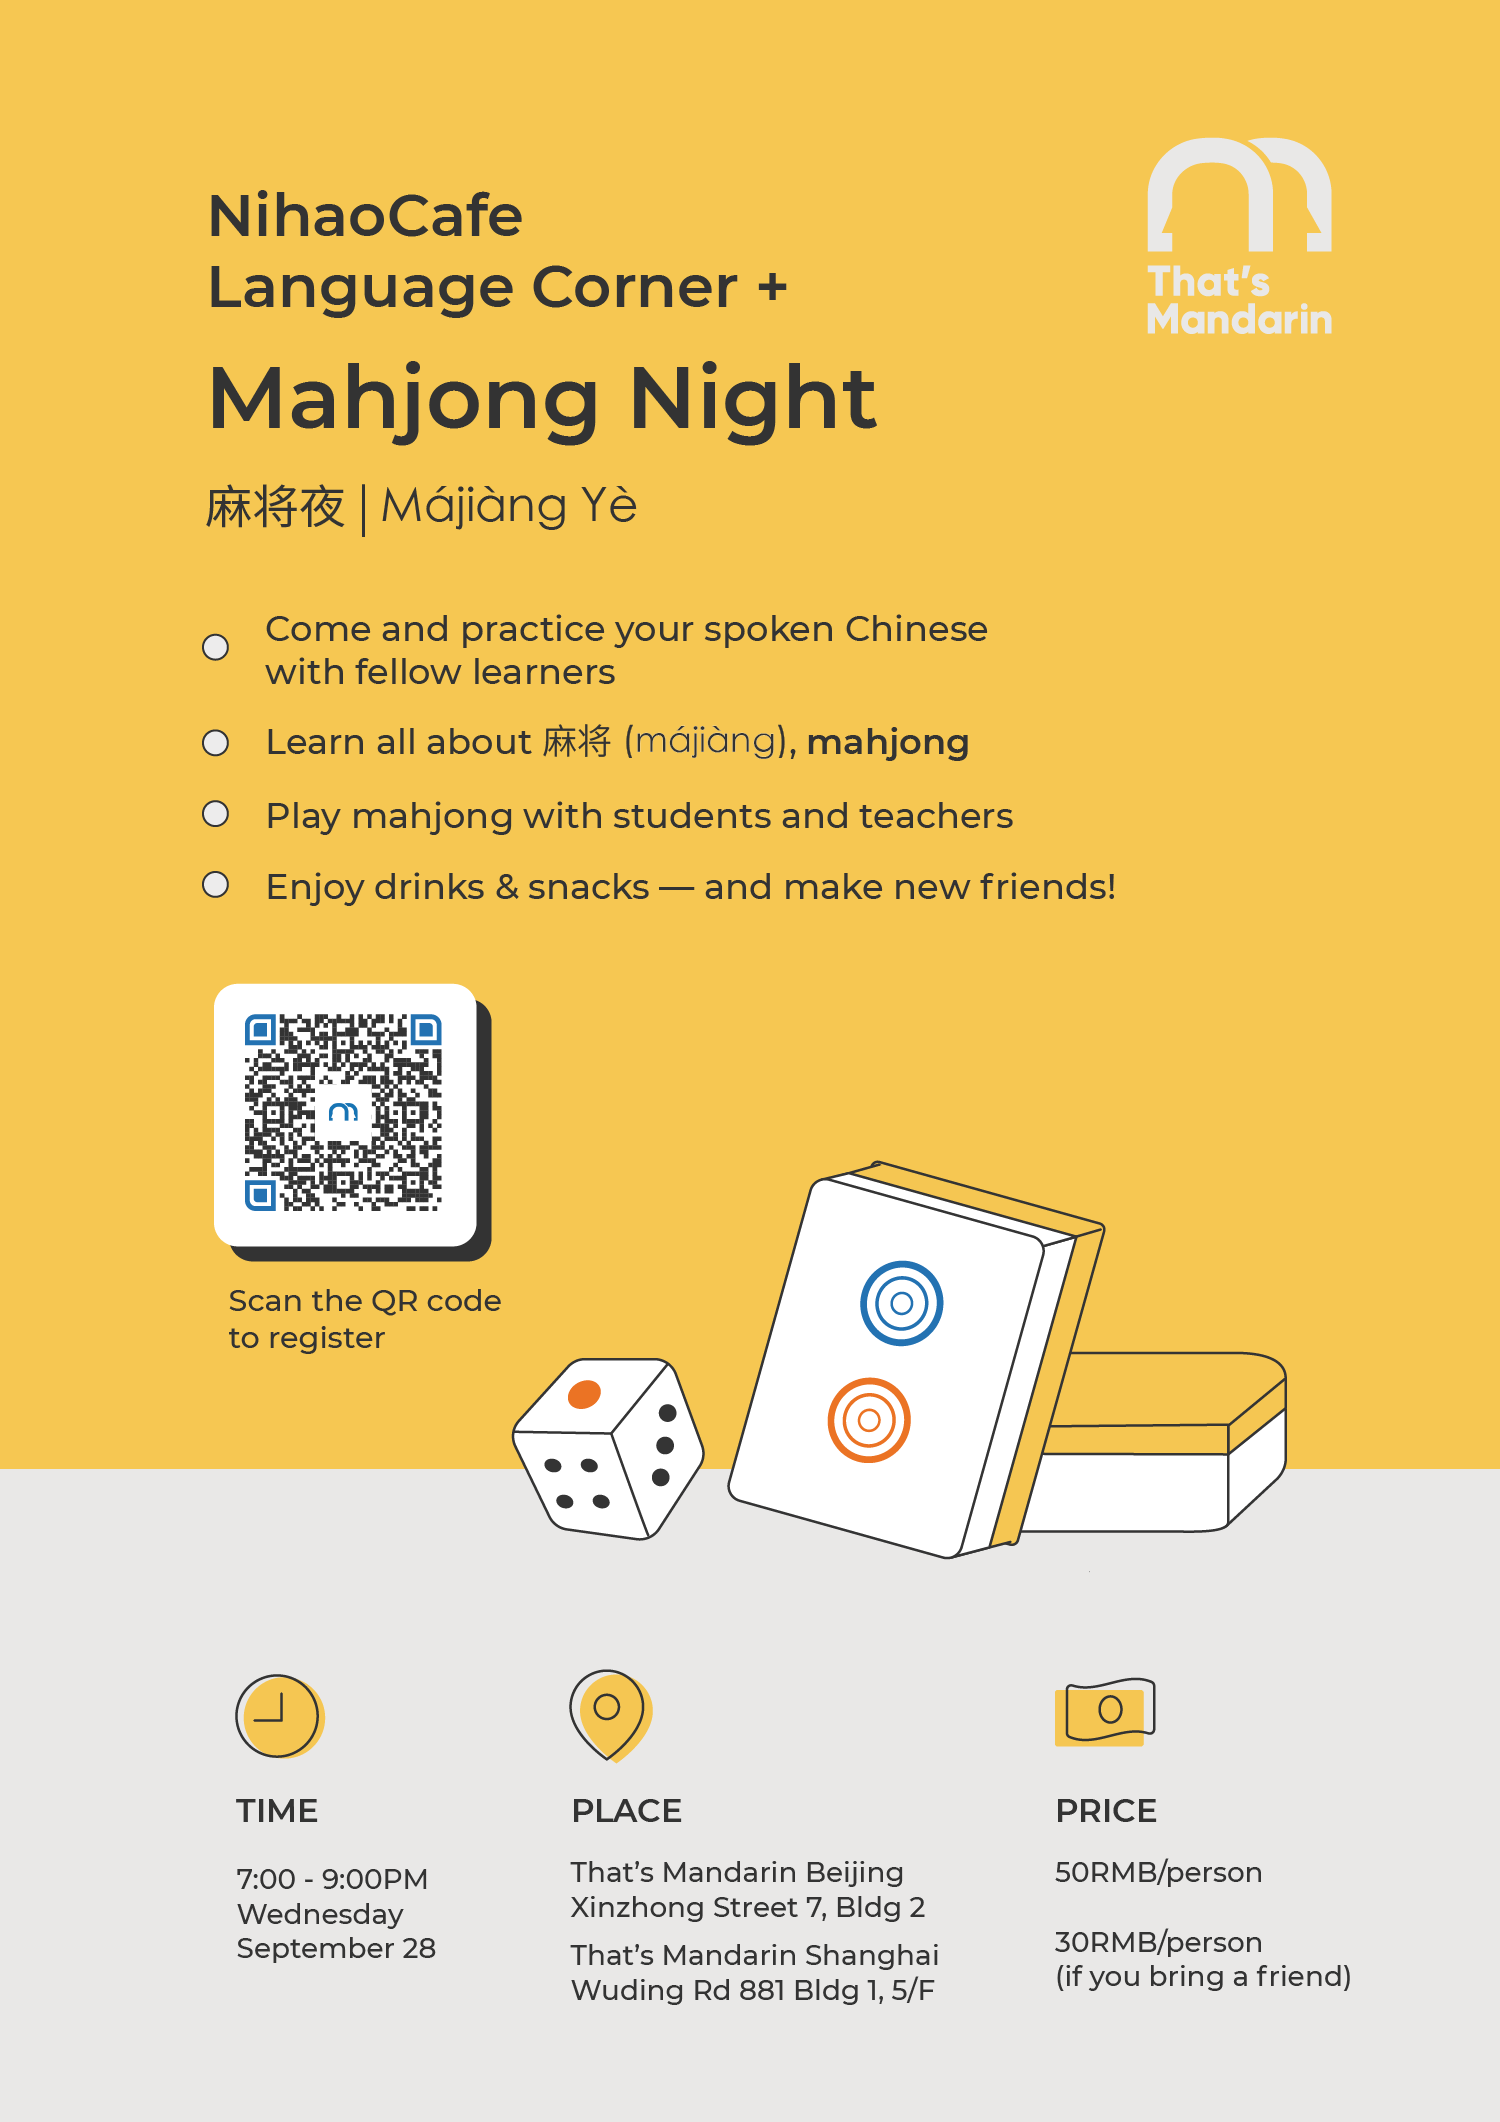 Sep 28, 2022 | NihaoCafe Language Corner + Mahjong Night